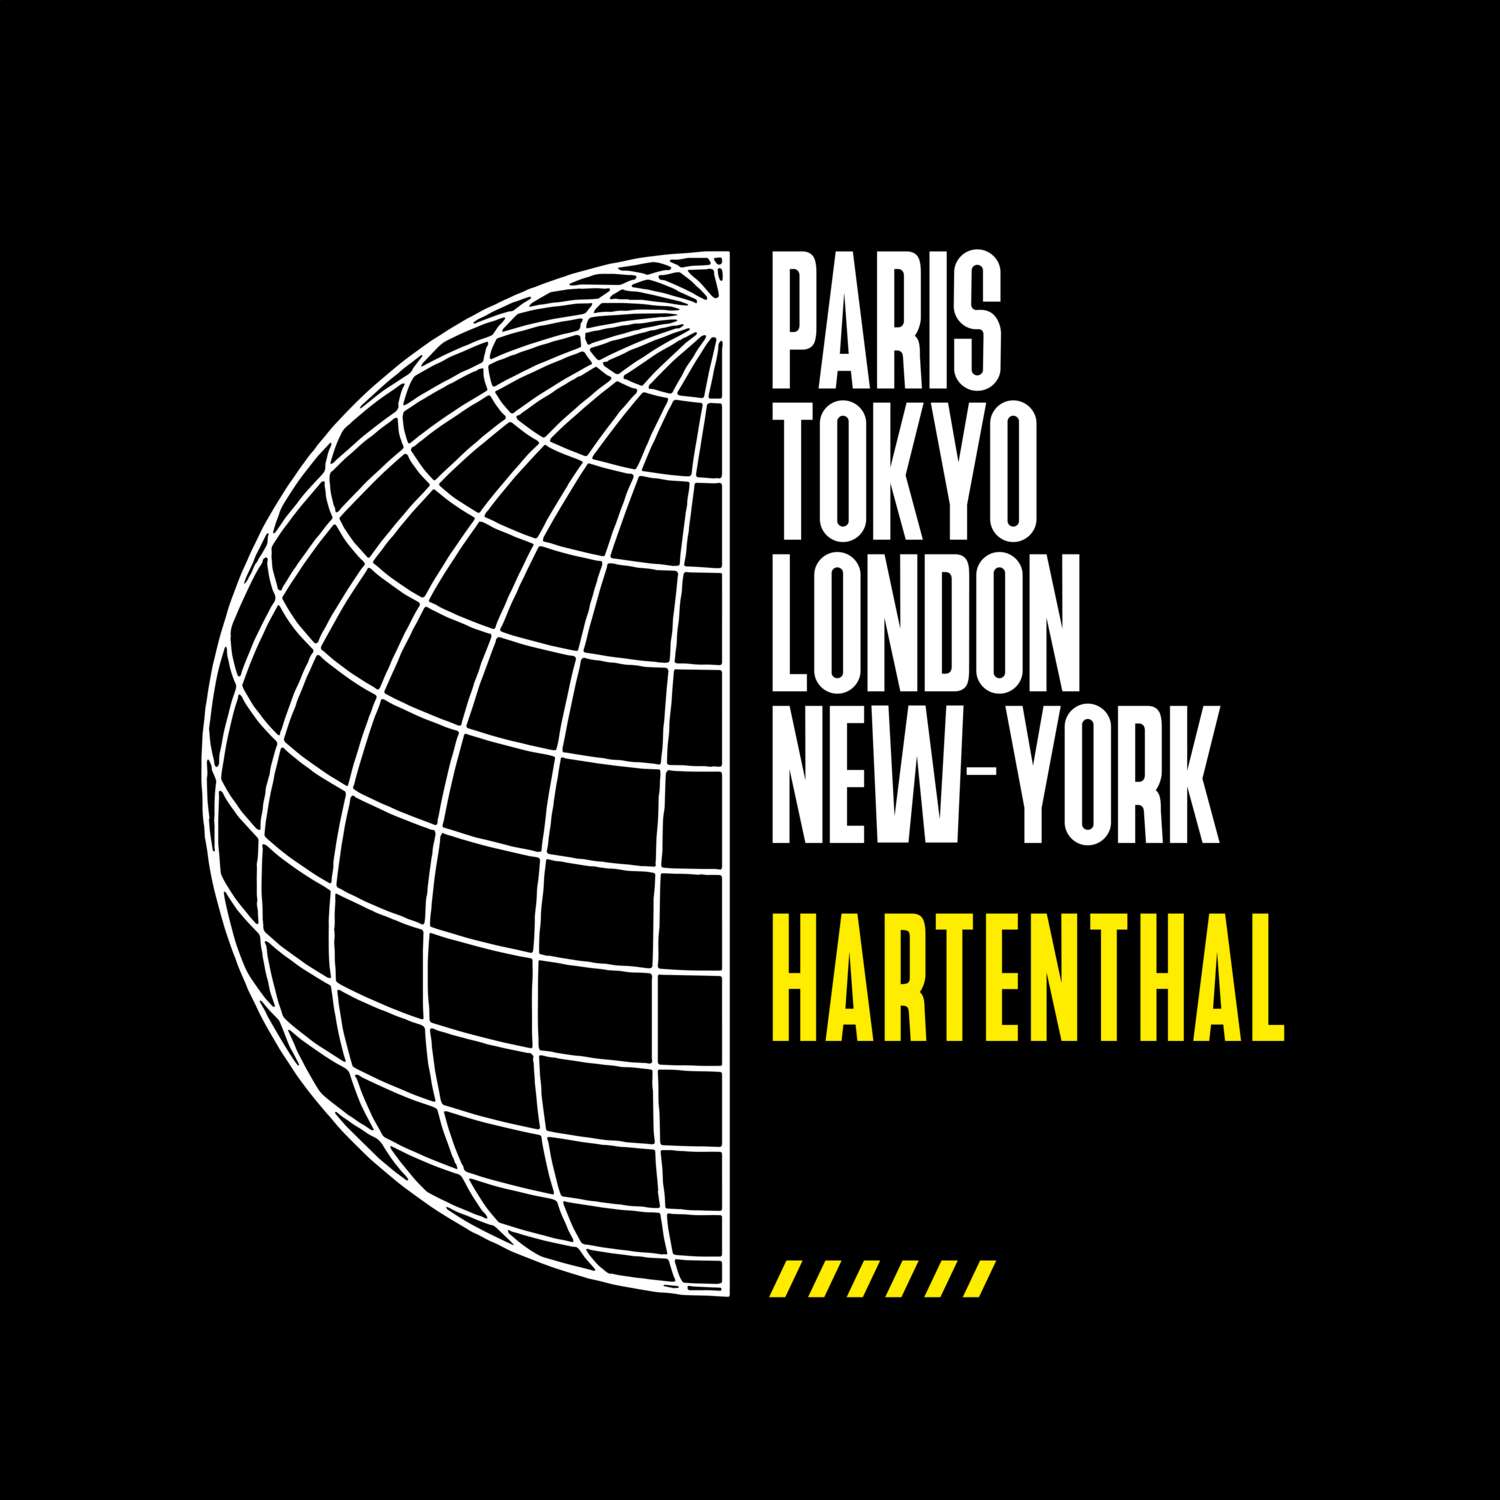 Hartenthal T-Shirt »Paris Tokyo London«